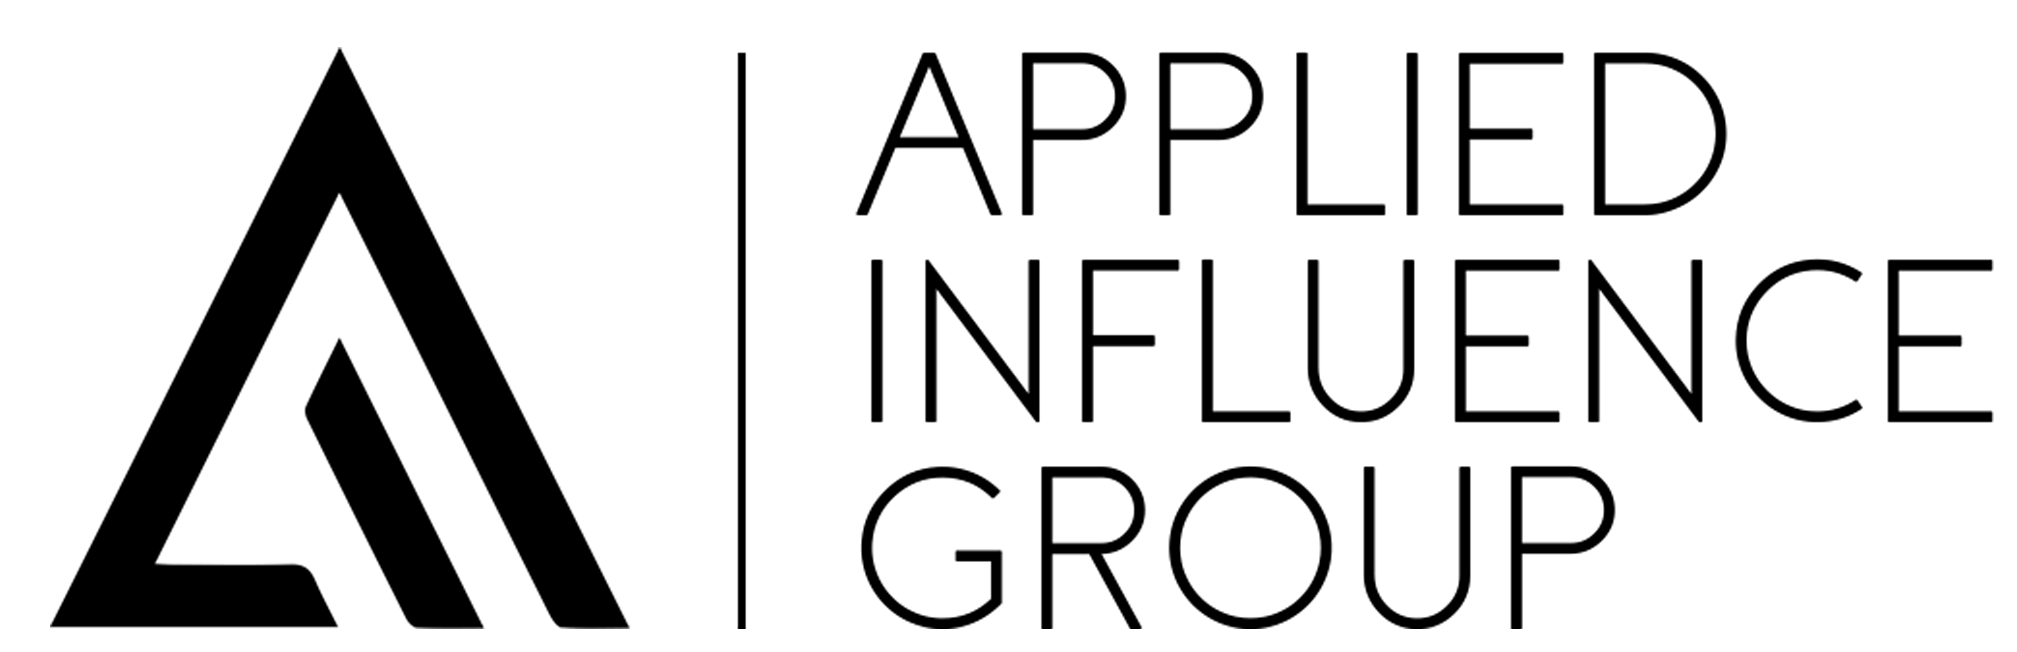 Logo Black 1 Dan Connors Kc